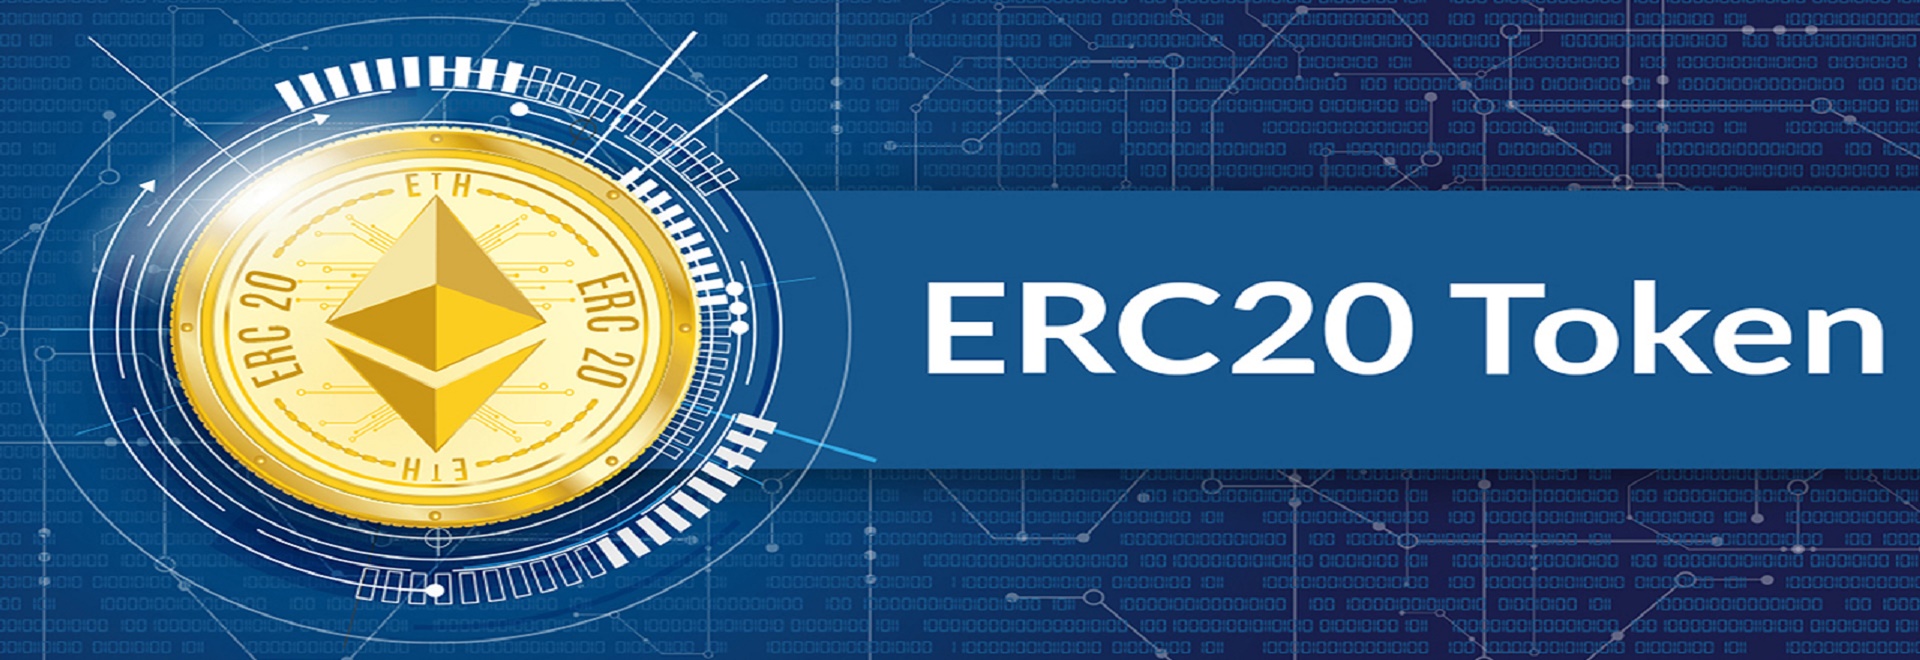 erc20 coin delivery - صفحه اصلی